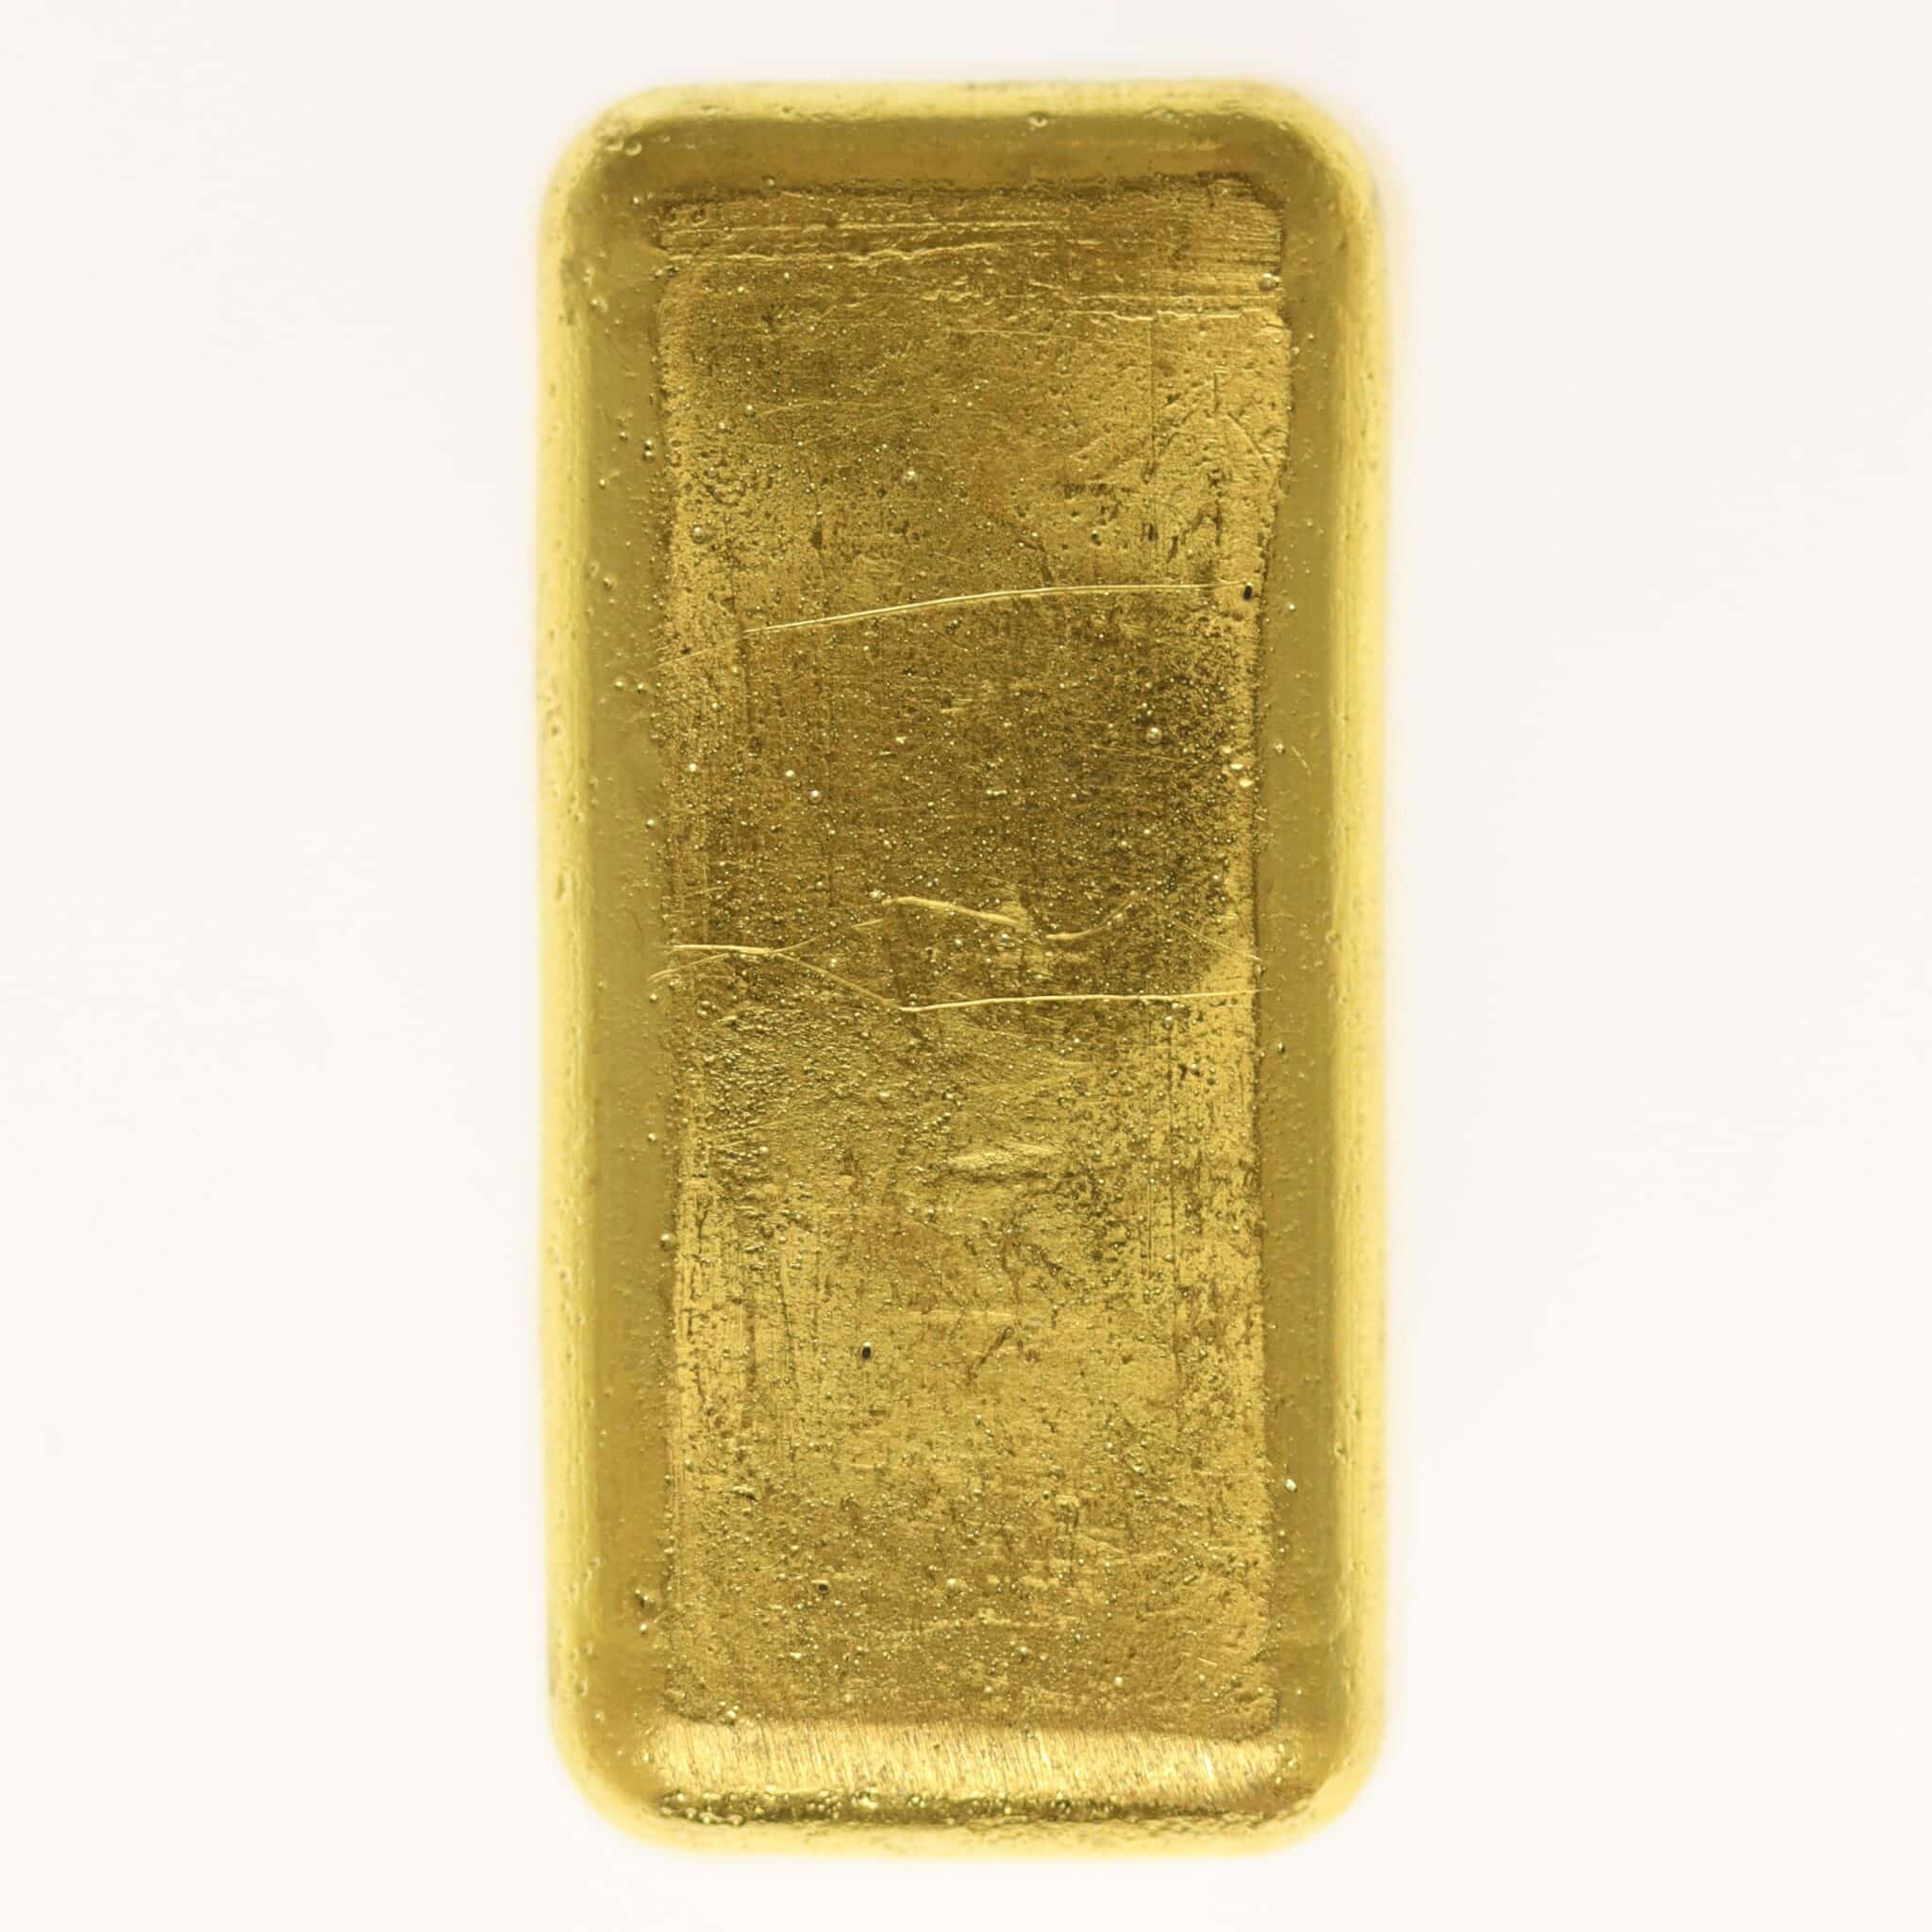 goldbarren - Goldbarren 5 OZ Australien Perth Mint